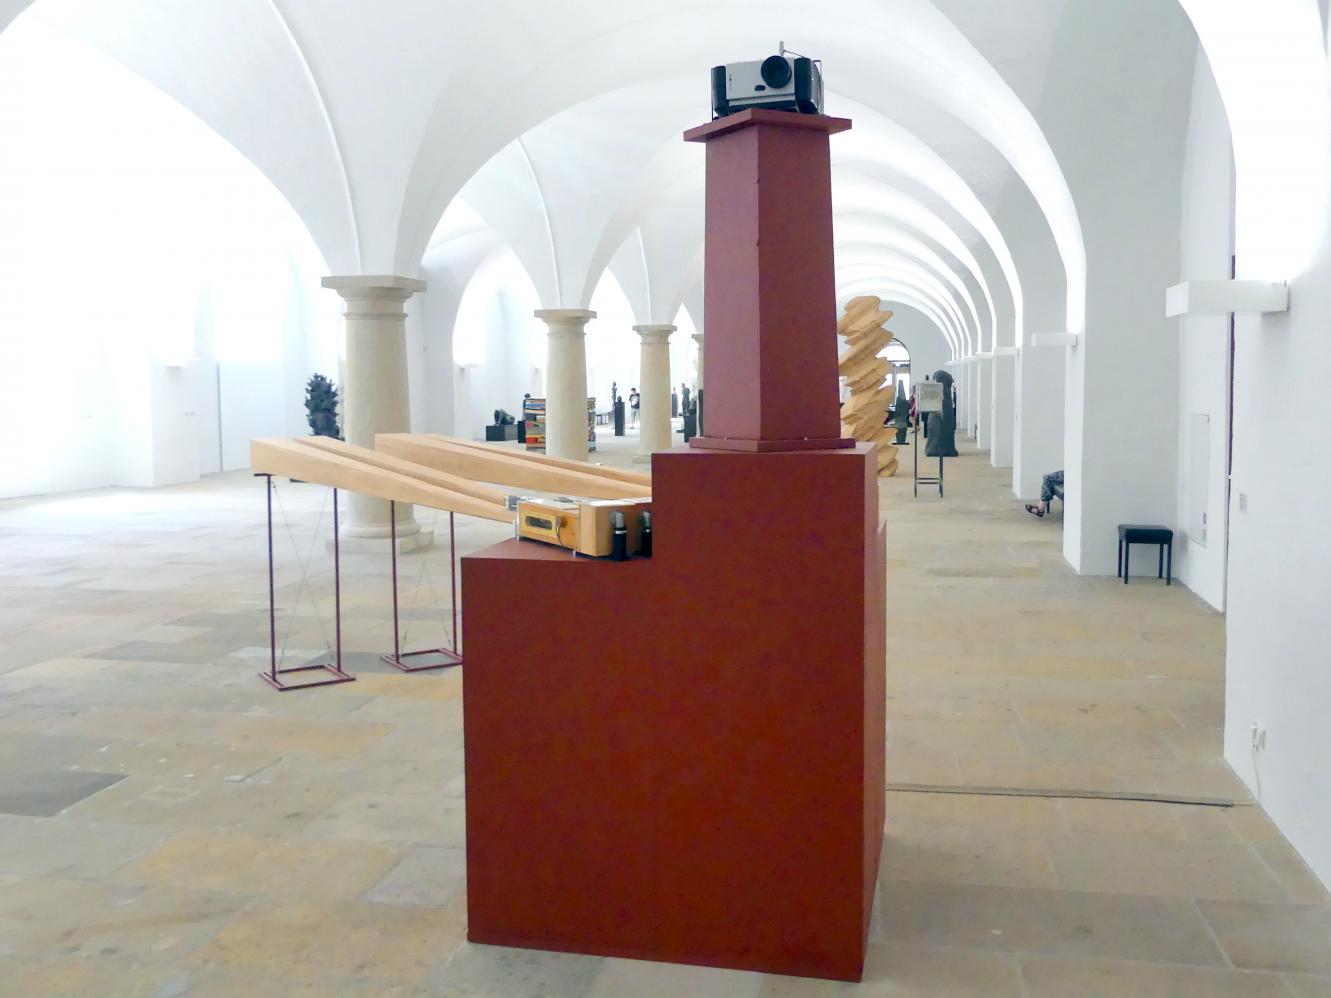 Stephan von Huene (1999), Sirenen Low, Dresden, Albertinum, Galerie Neue Meister, Erdgeschoss, Skulpturenhalle, 1999, Bild 5/10